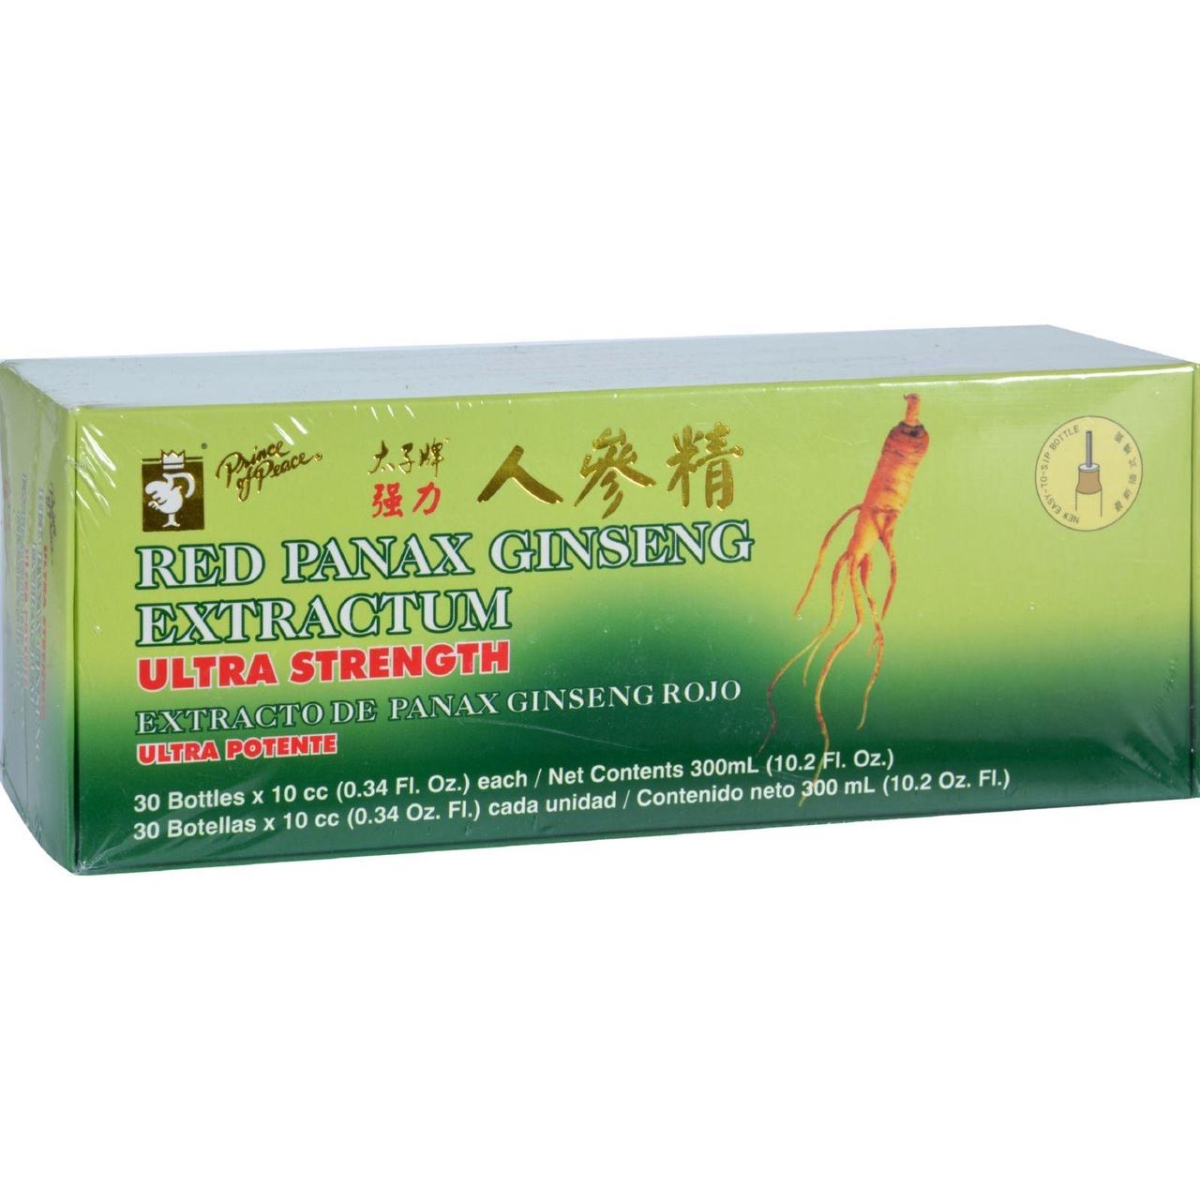 Hg0958652 Red Panax Ginseng Extractum Ultra Strength - 30 Vials